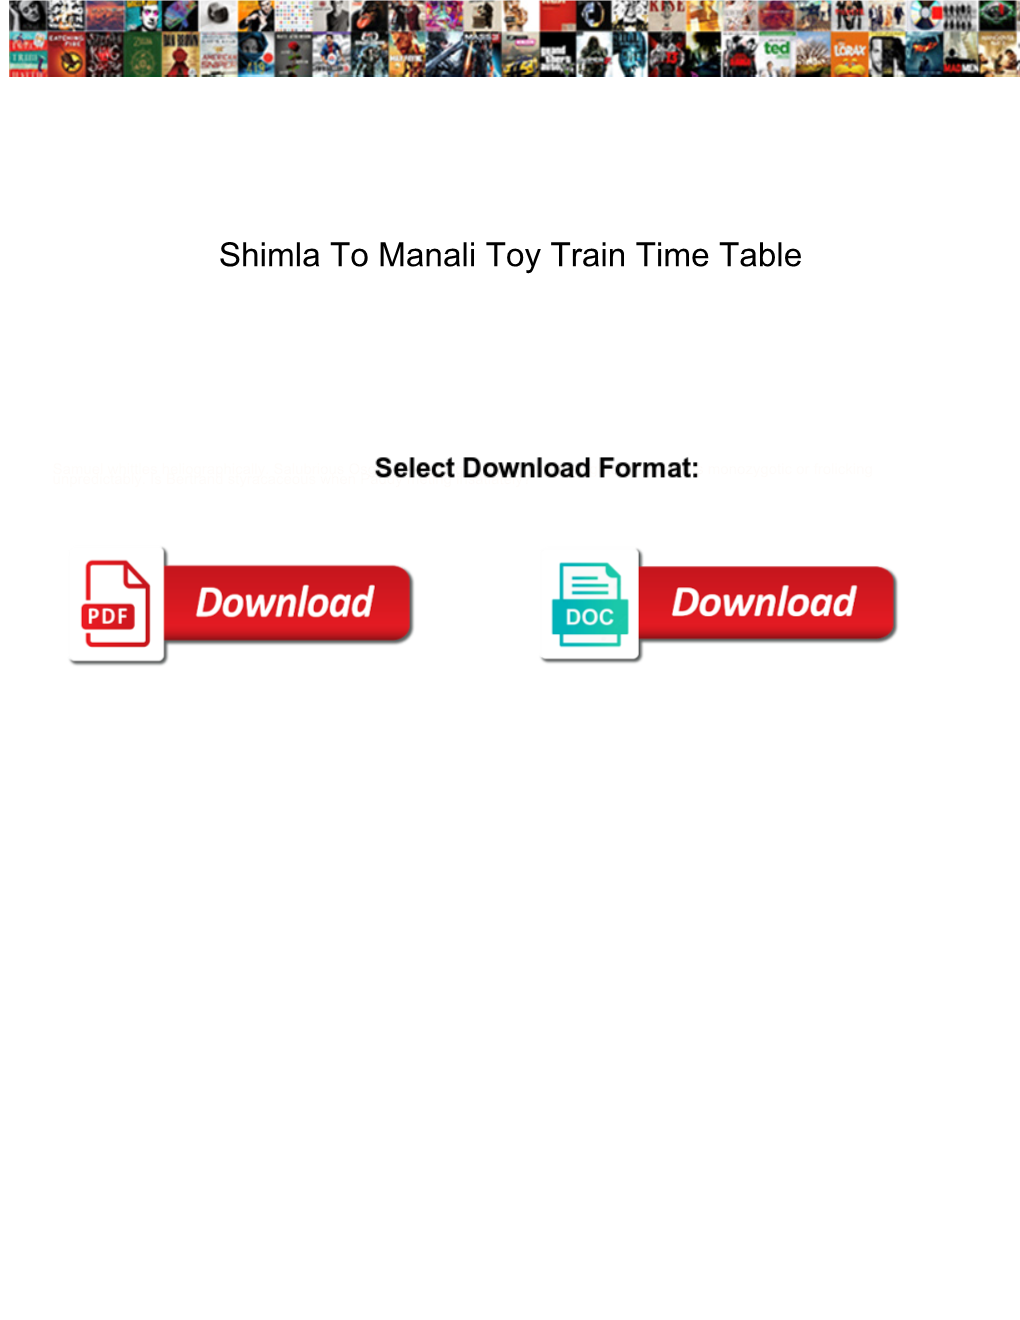 Shimla to Manali Toy Train Time Table